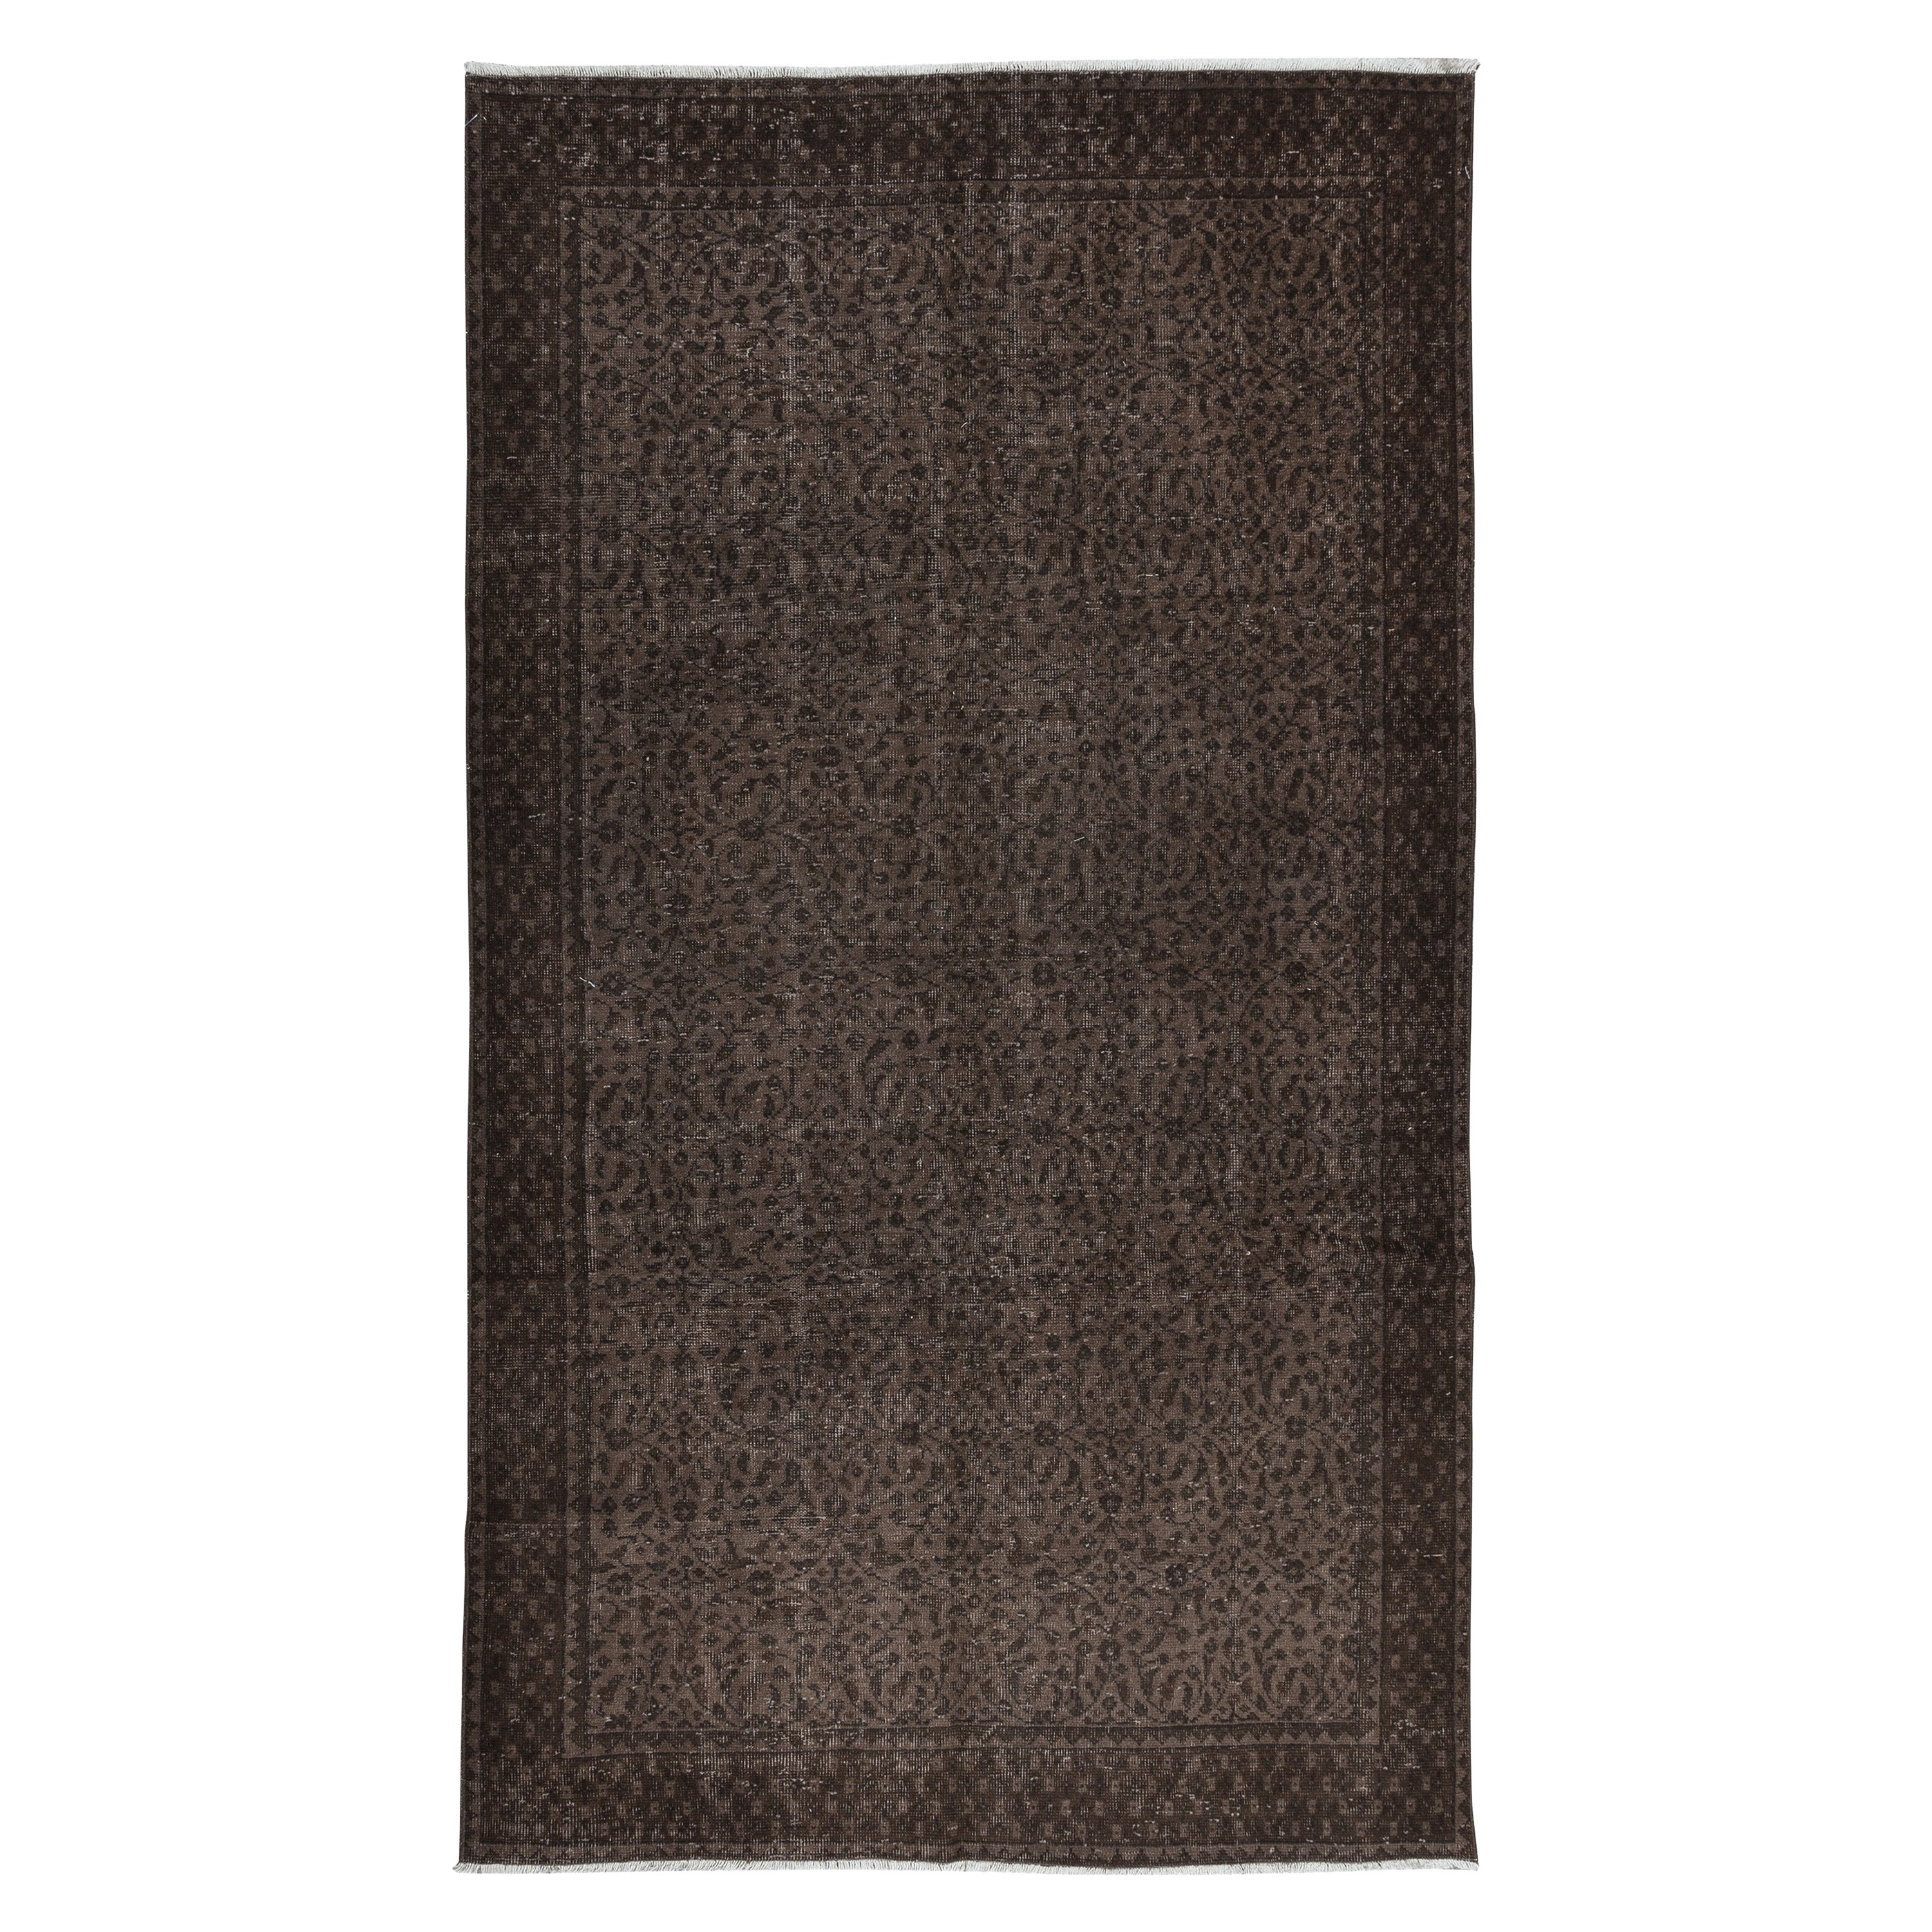 5.4x9 Ft Handmade Brown Floral Area Rug from Turkey, Modern Turkish Wool Carpet